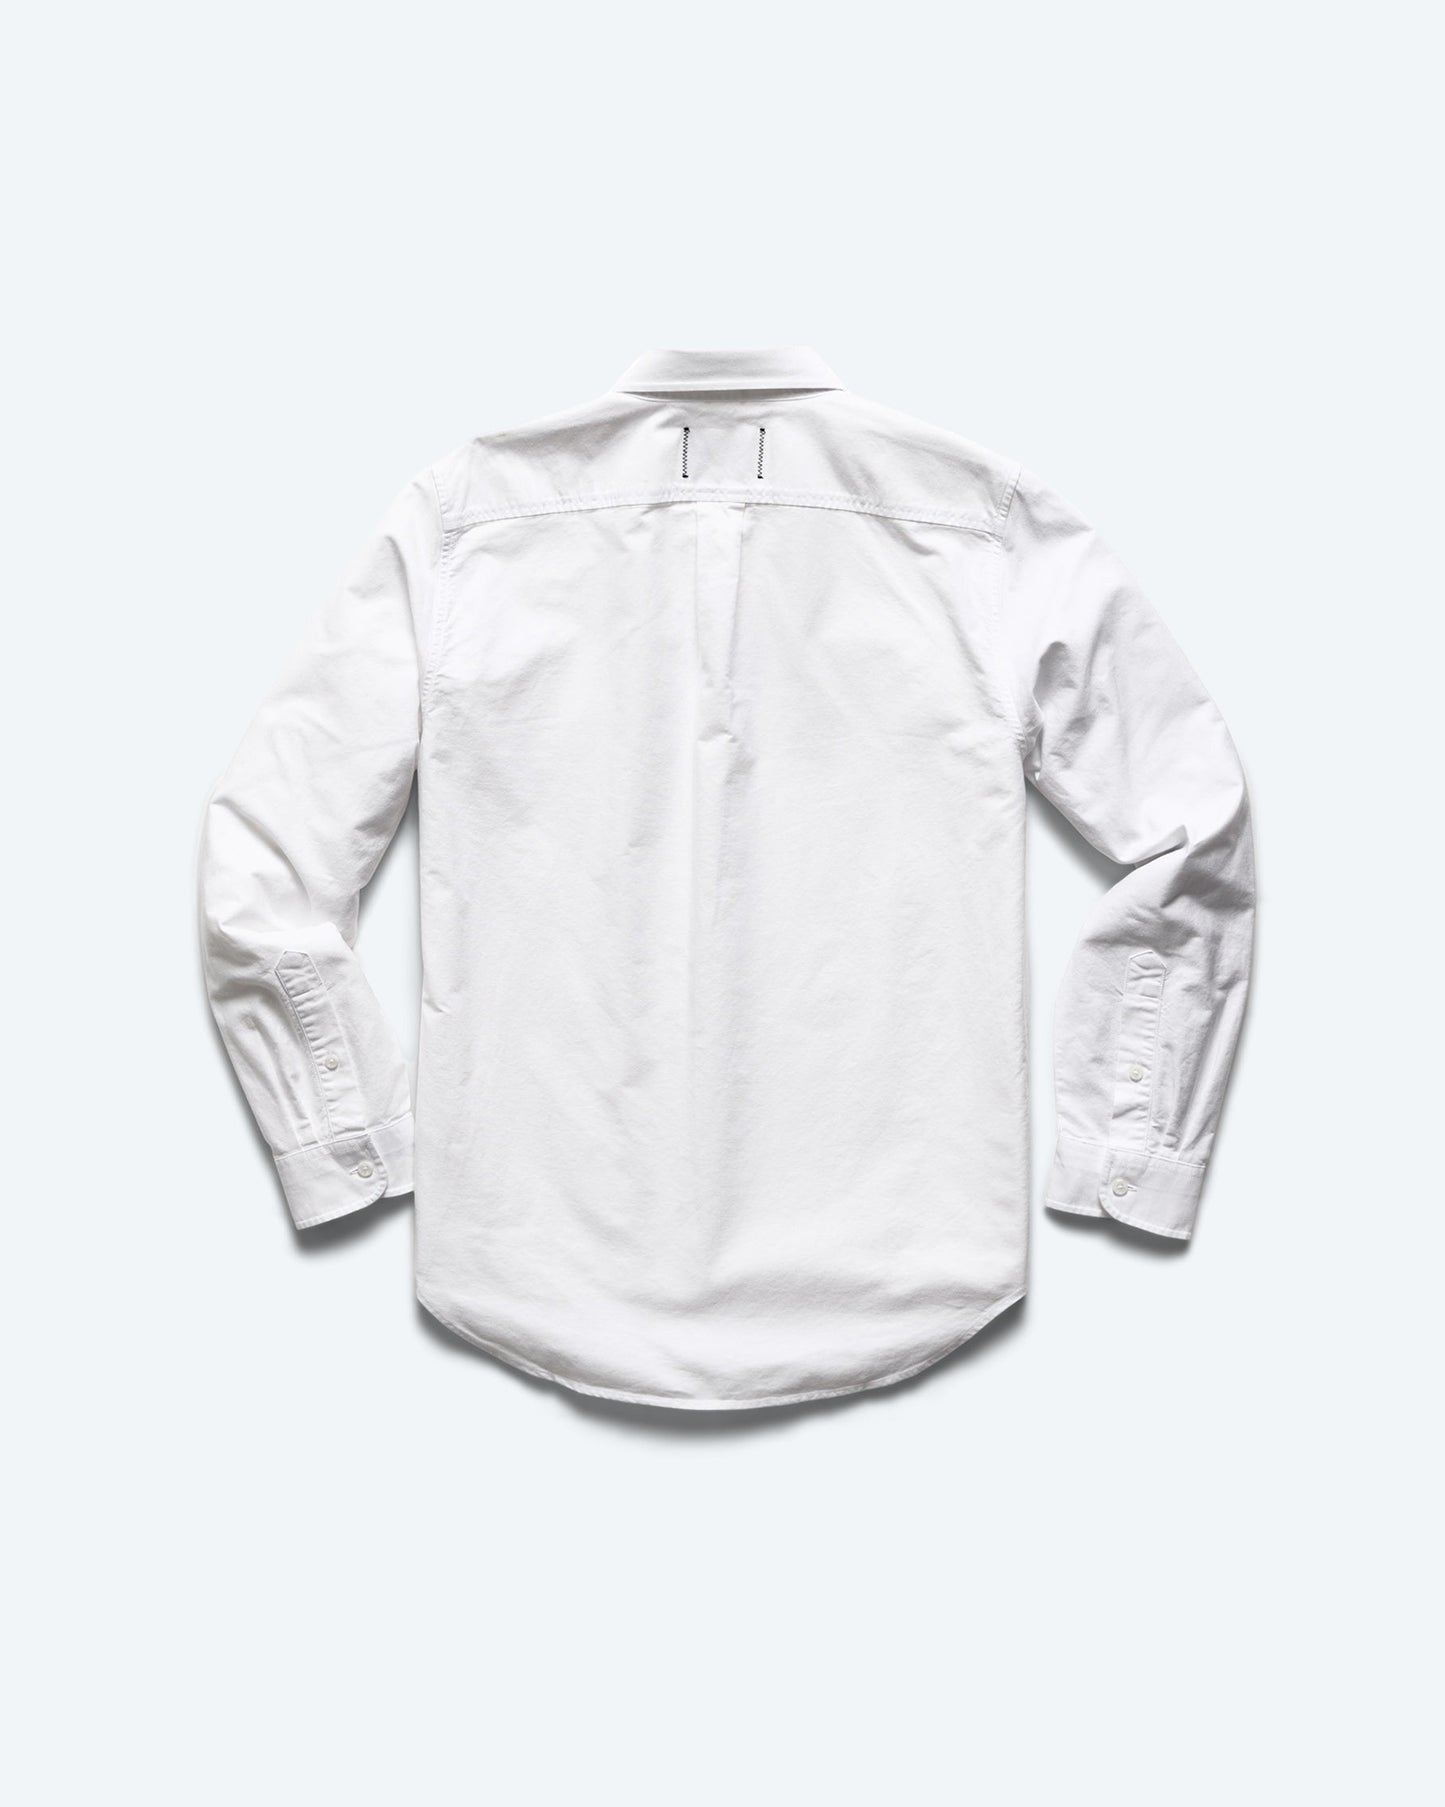 Cotton Oxford Windsor Shirt